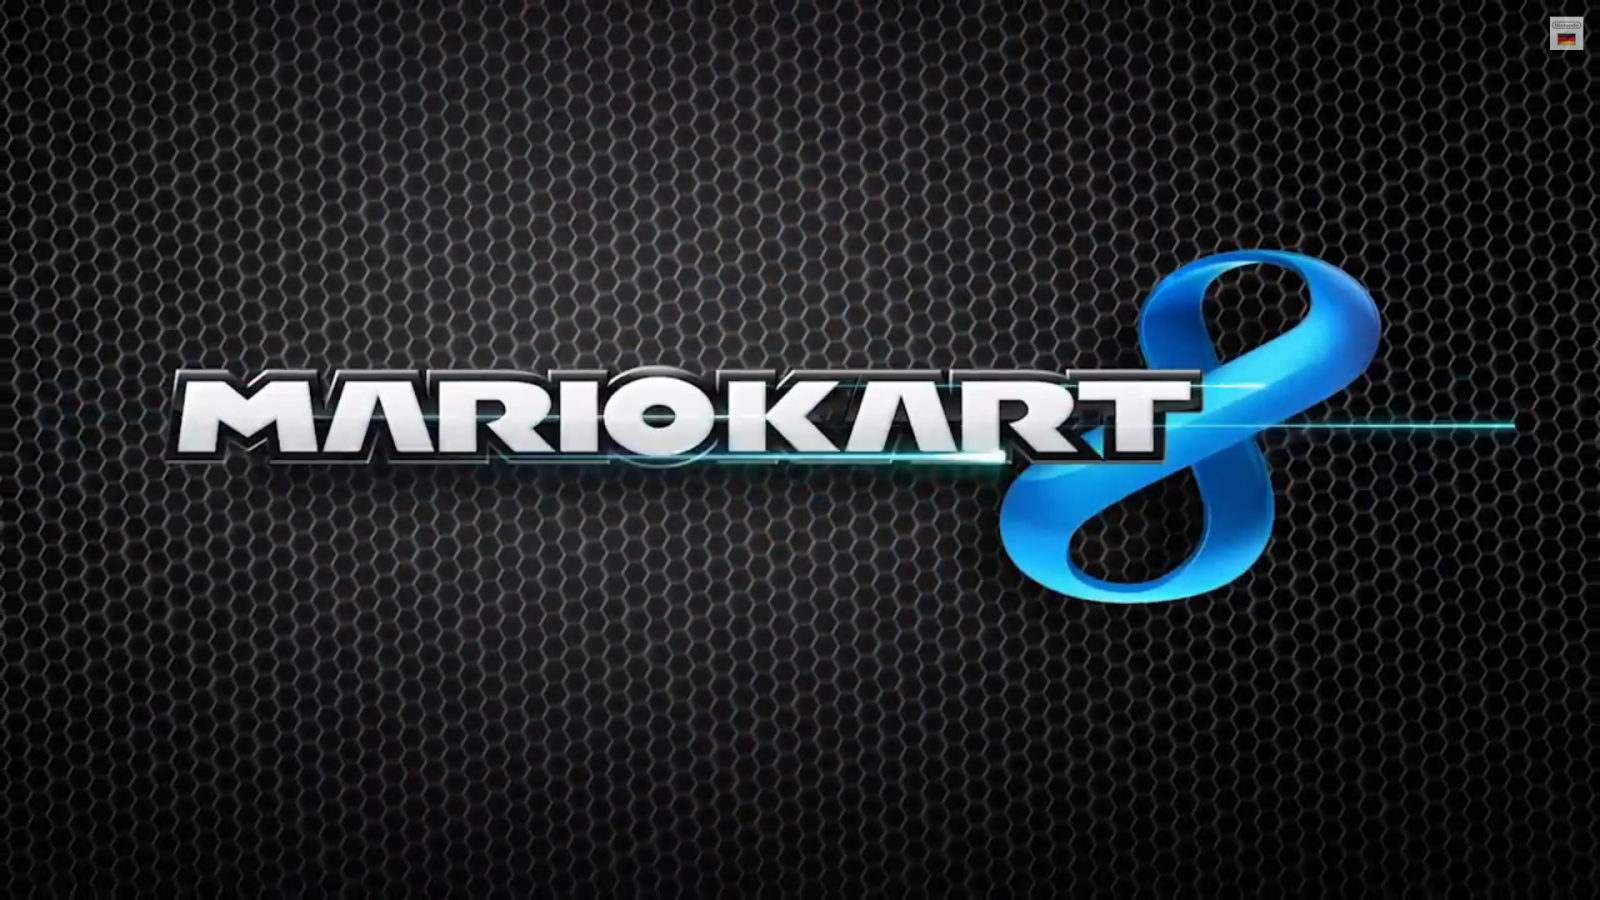 Mario Kart 8 DLC Pack 1 – Test / Review